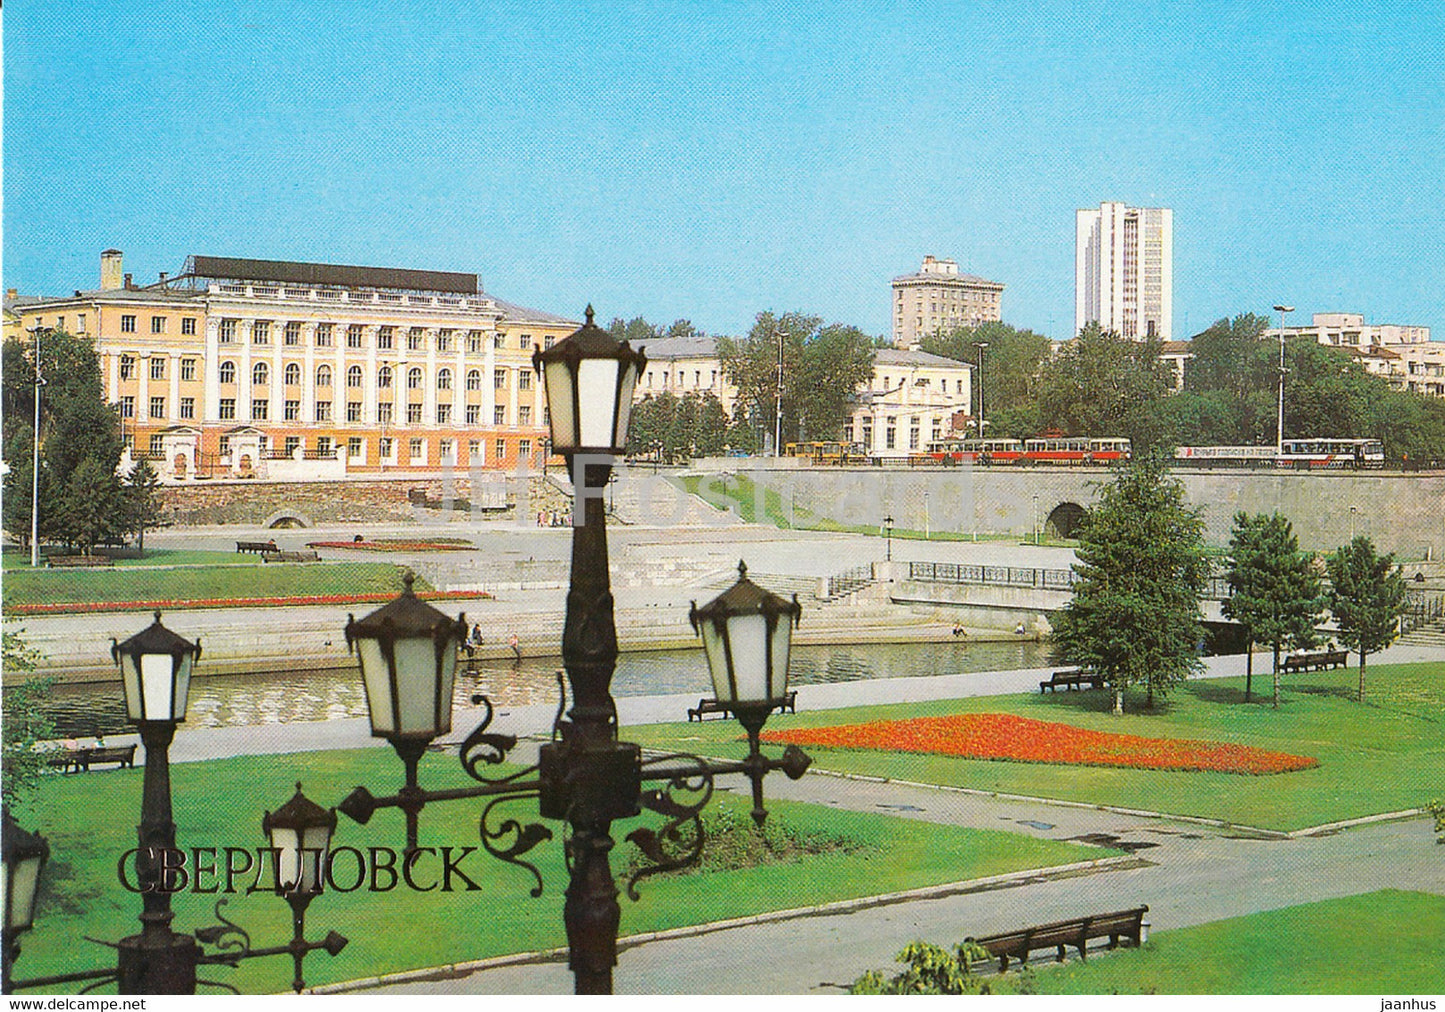 Sverdlovsk - Yekaterinburg - Historical Square - tram - 1986 - Russia USSR - unused - JH Postcards